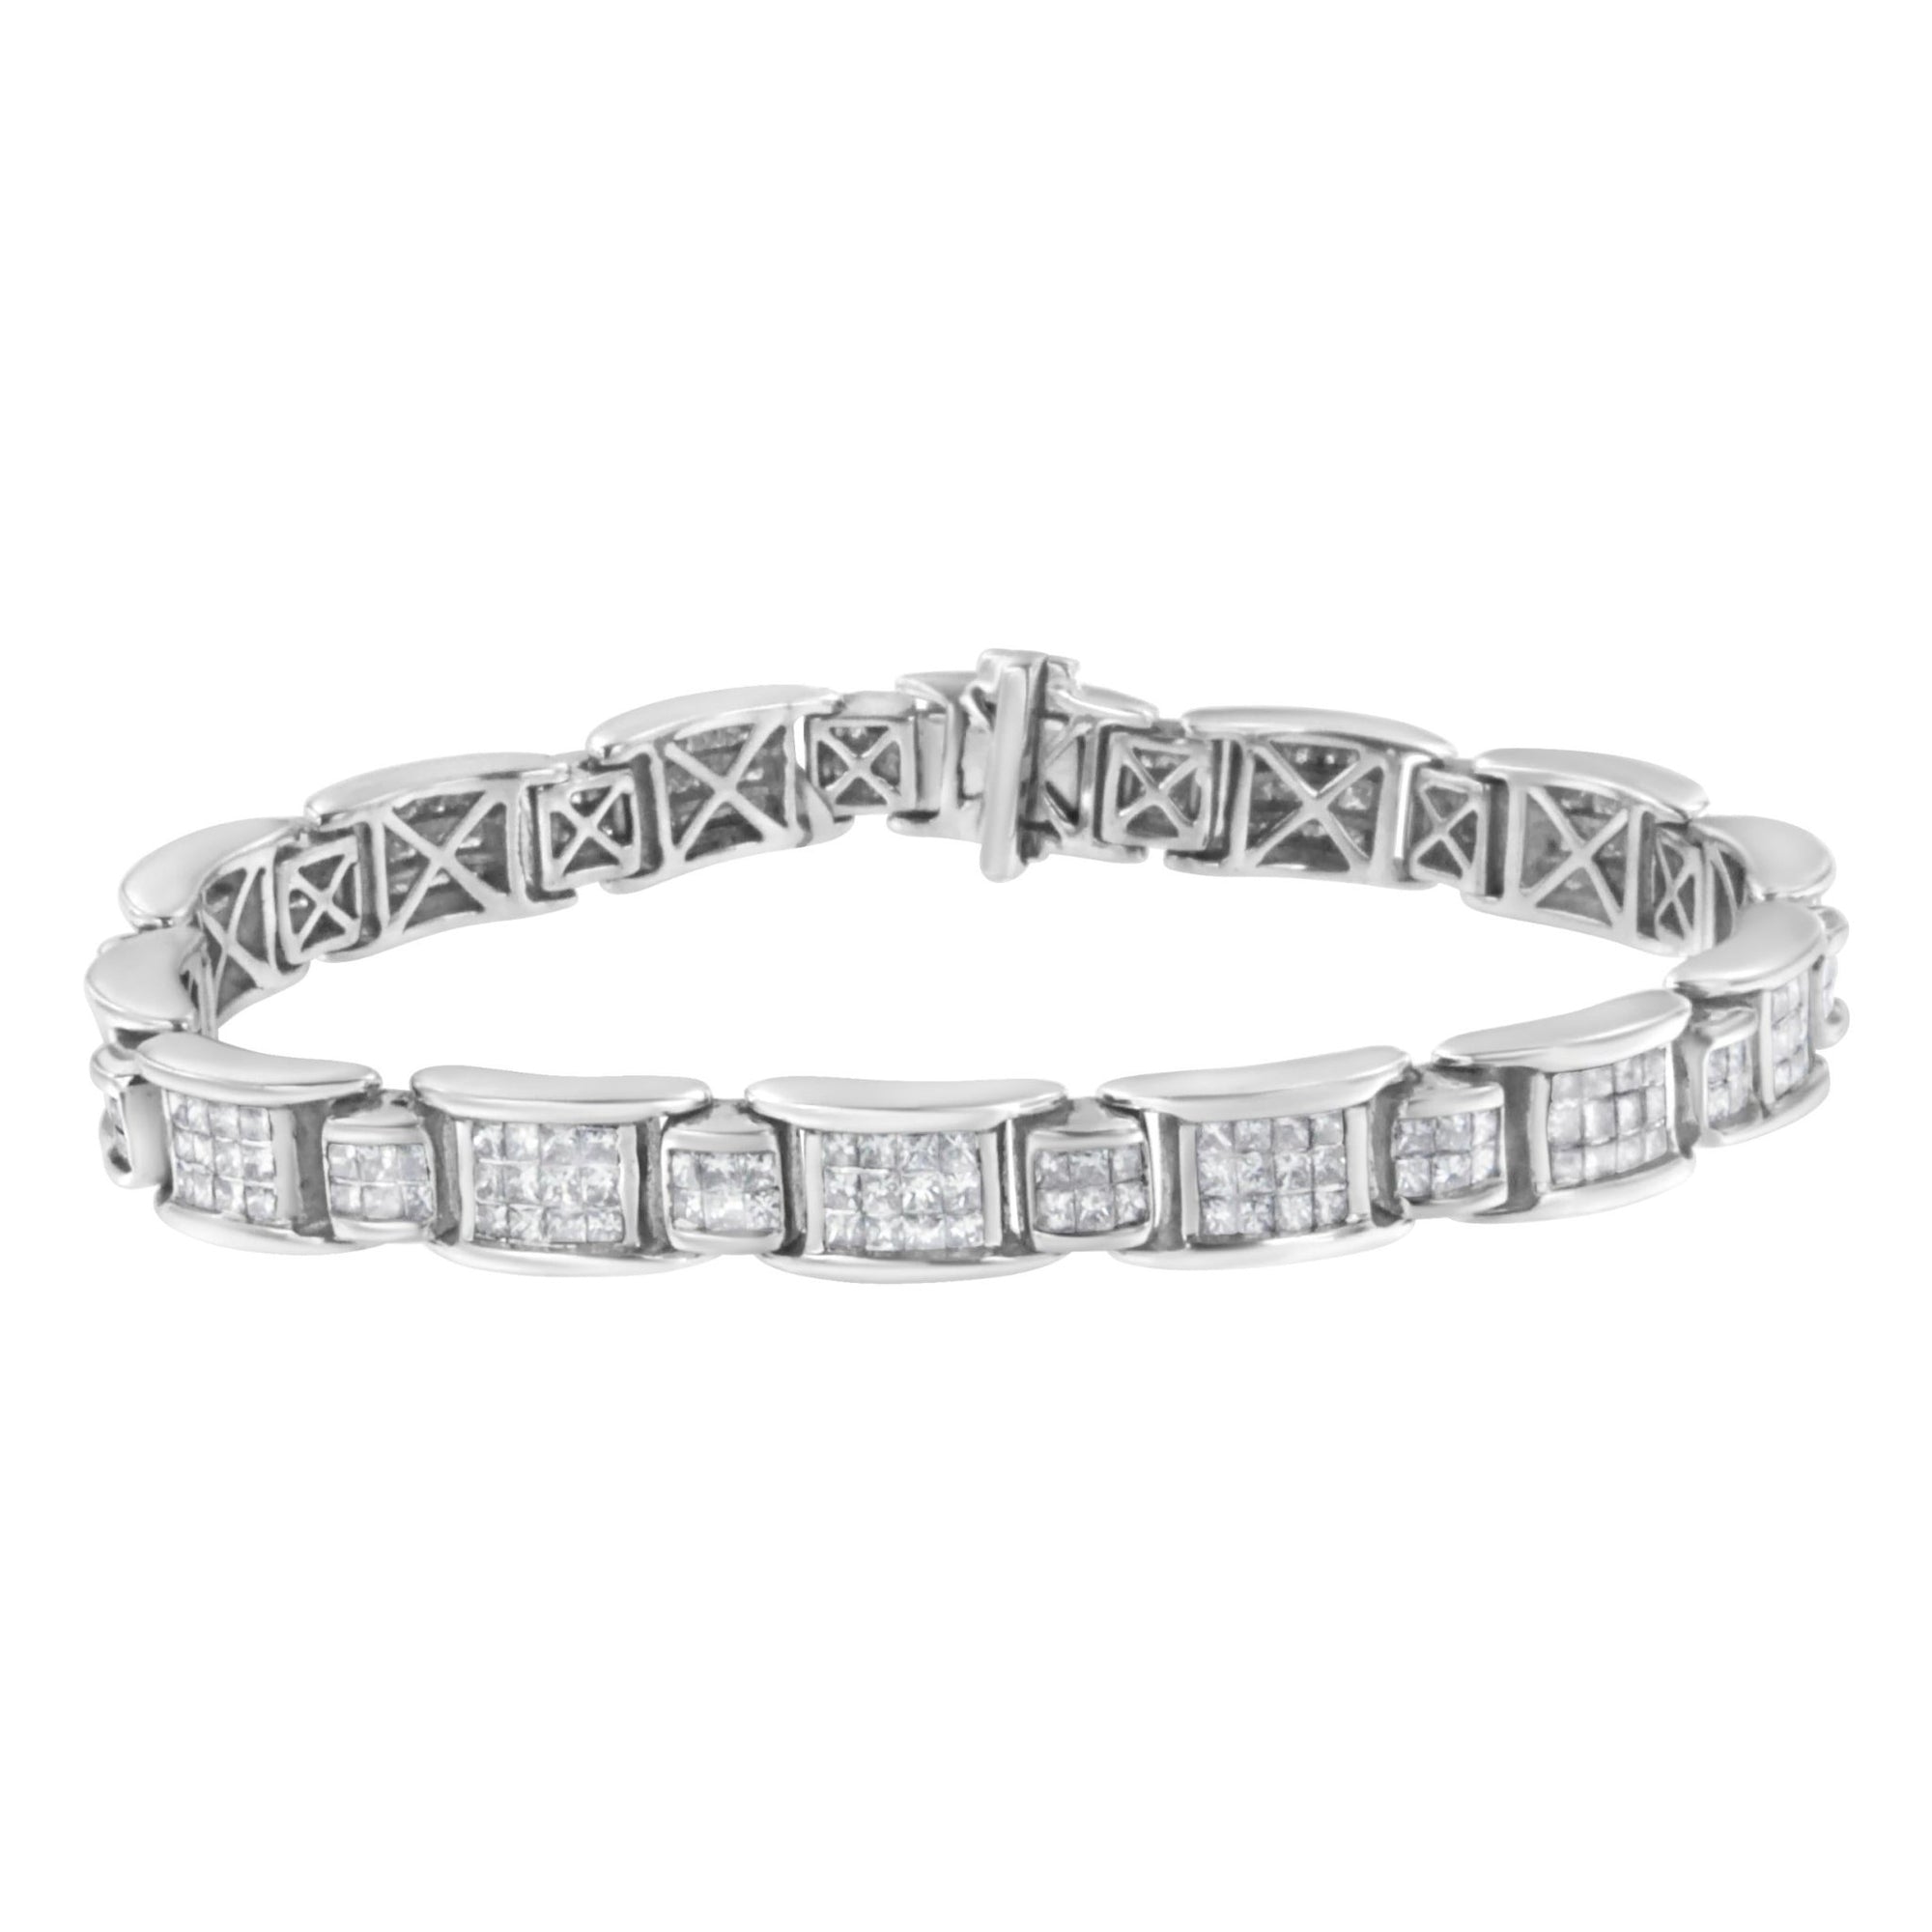 14K White Gold 5.0 Cttw Princess-Cut Diamond Rectangular Alternating Station 7" Tennis Bracelet (G-H Color, SI1-SI2 Clarity) - LinkagejewelrydesignLinkagejewelrydesign